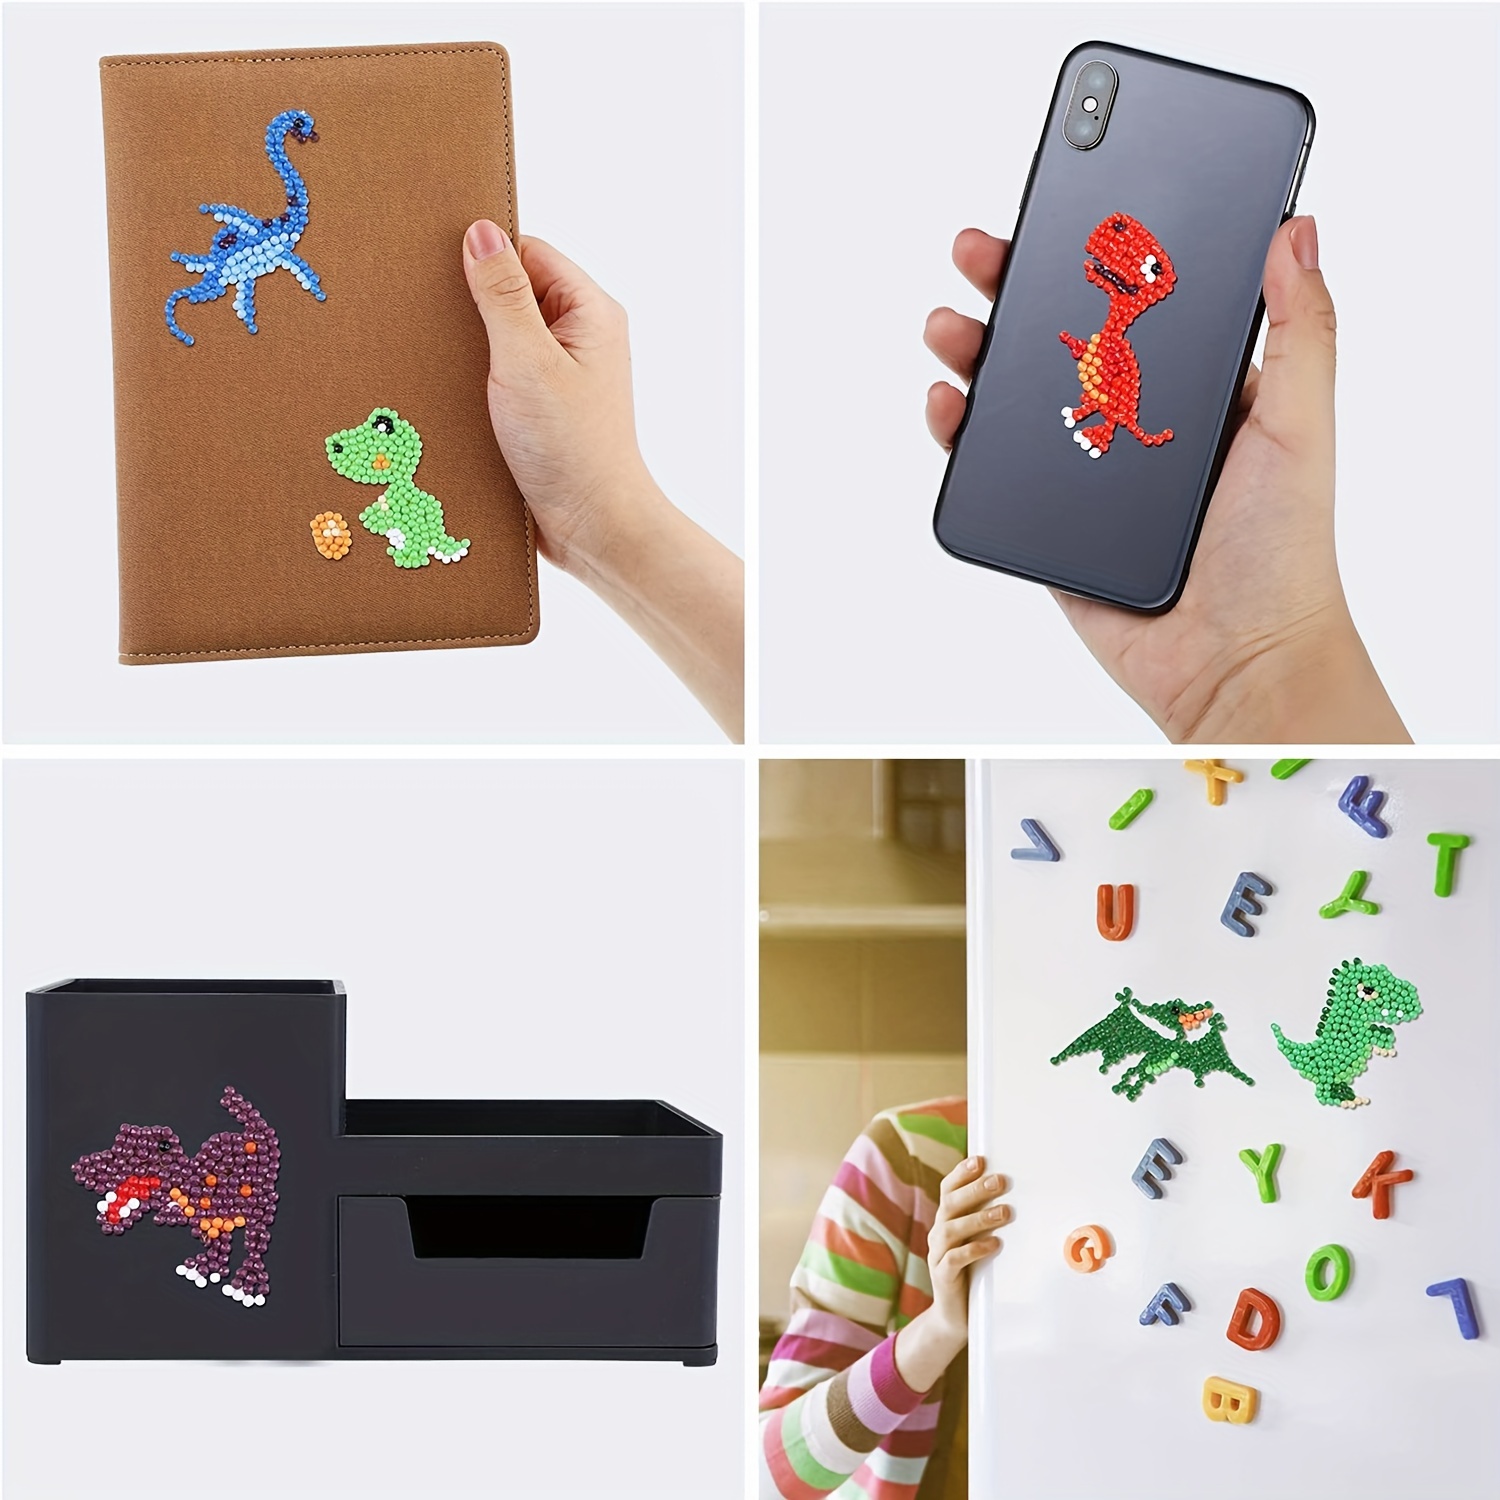 DIY Dinosaur Diamond Painting Sticker Kit for Kids US SELLER Fast